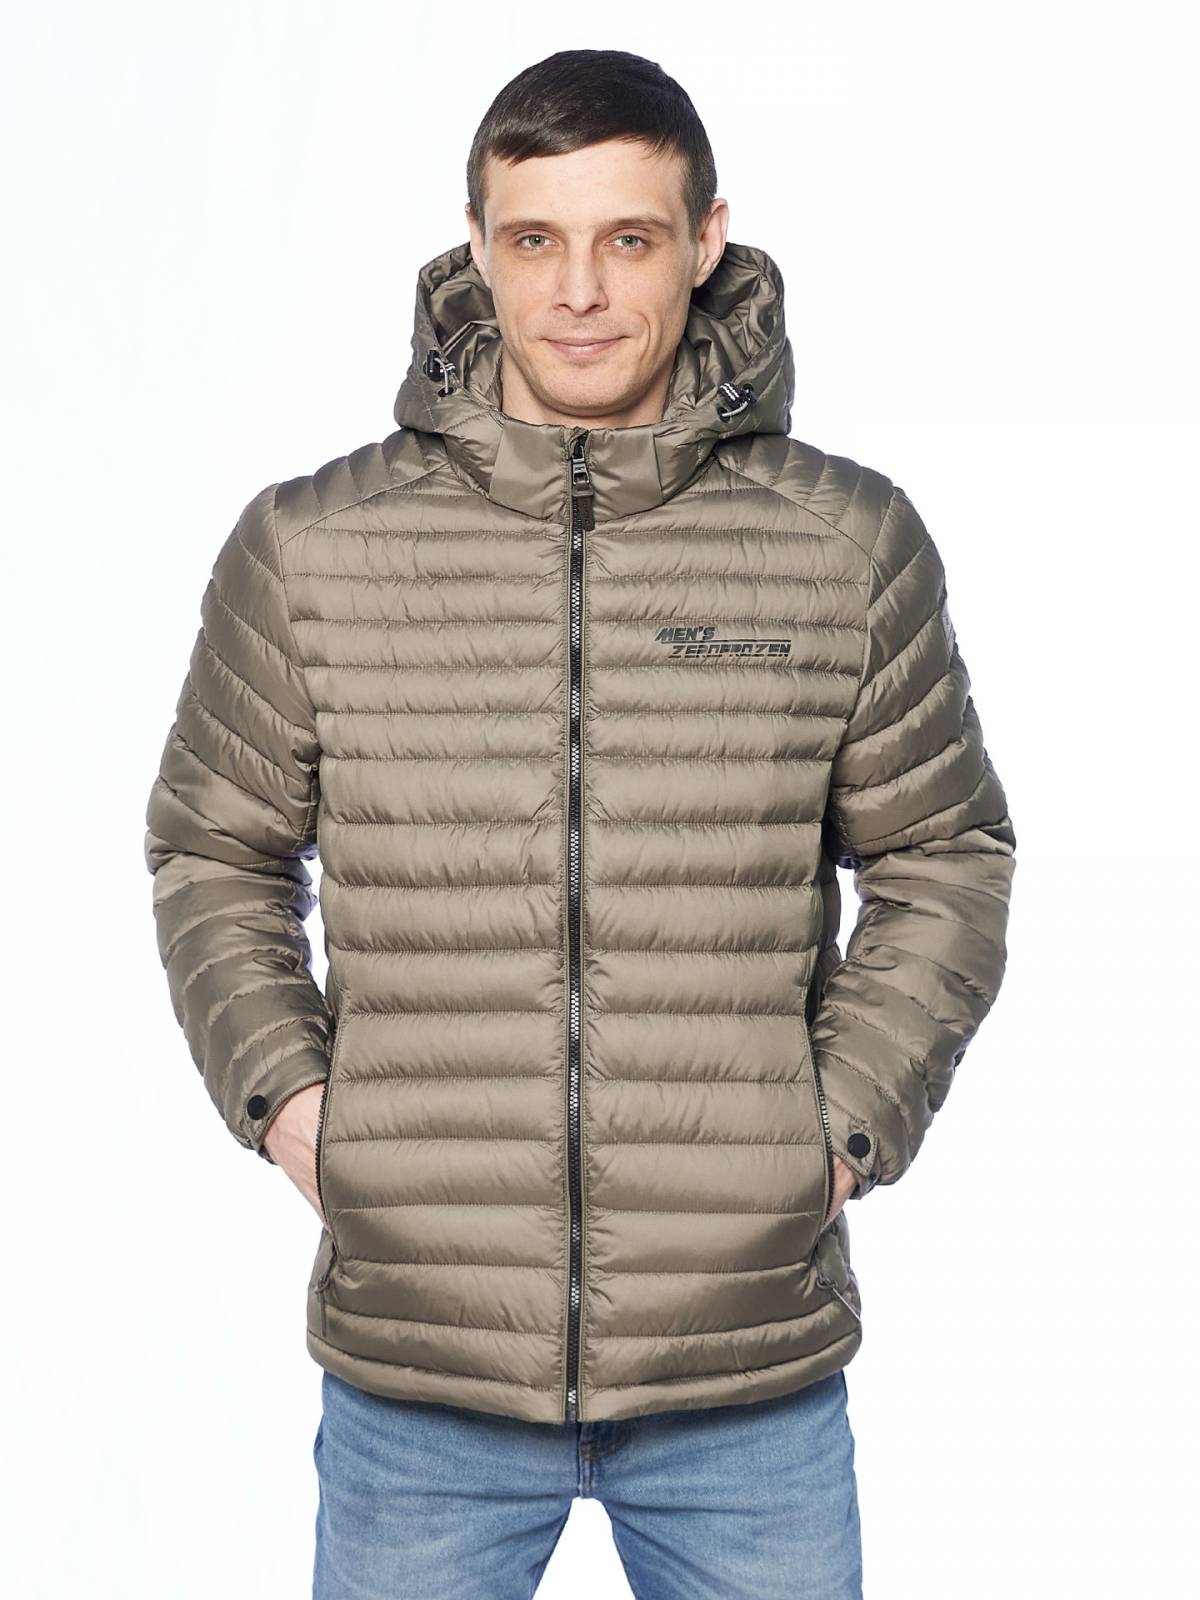 Куртка мужская Zero Frozen 4225 бежевая 52 RU